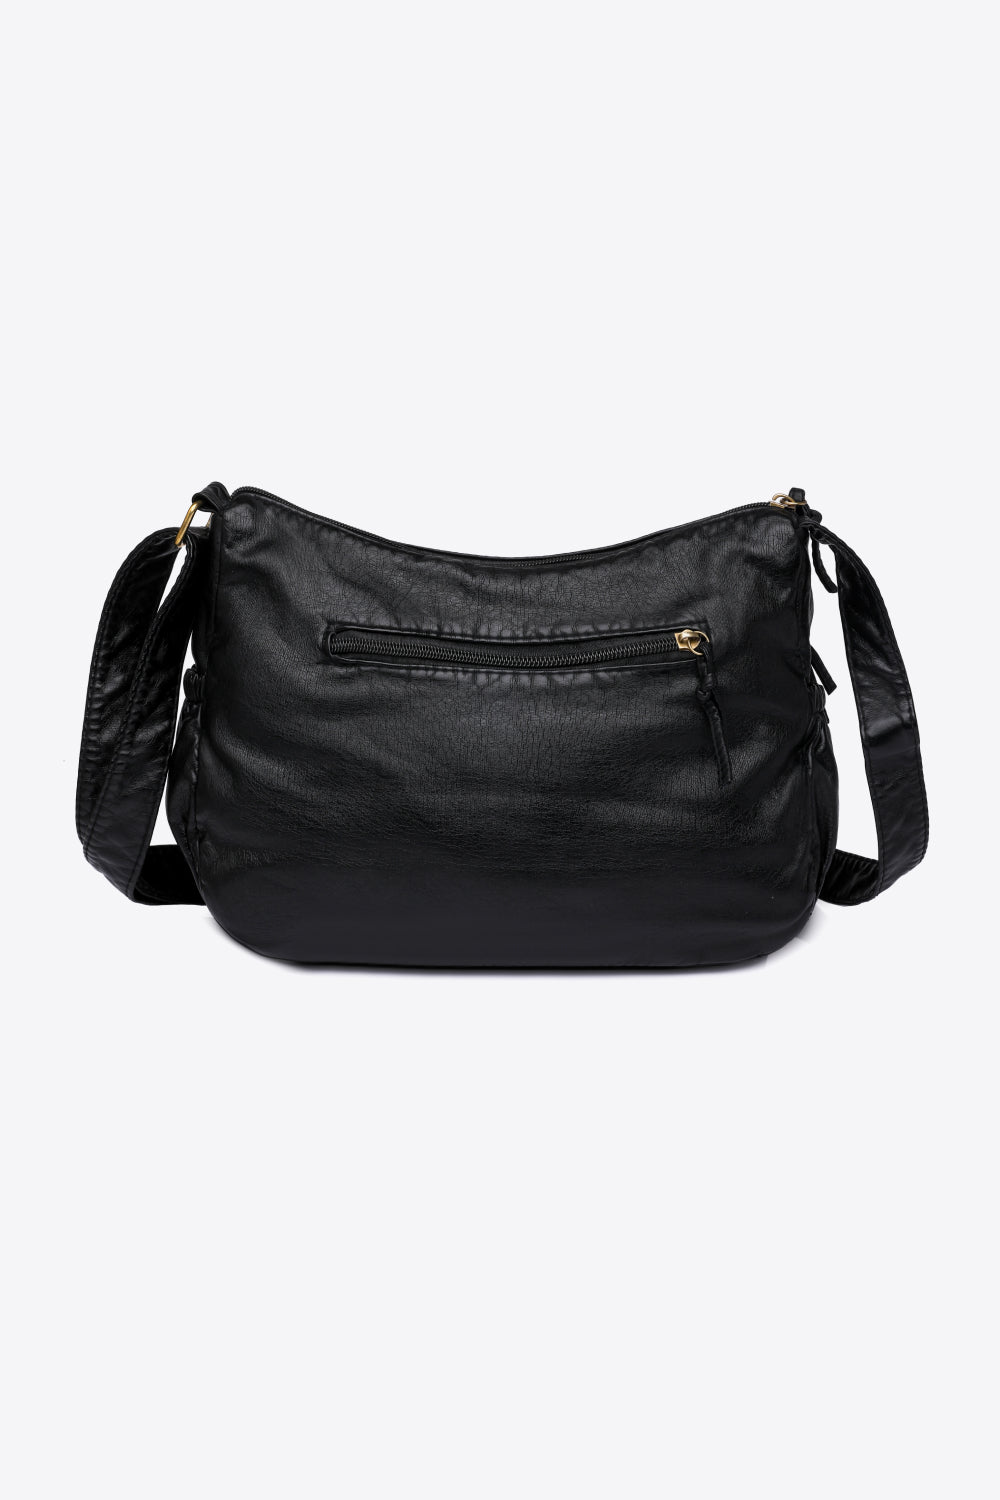 Uylee's Boutique PU Leather Crossbody Bag